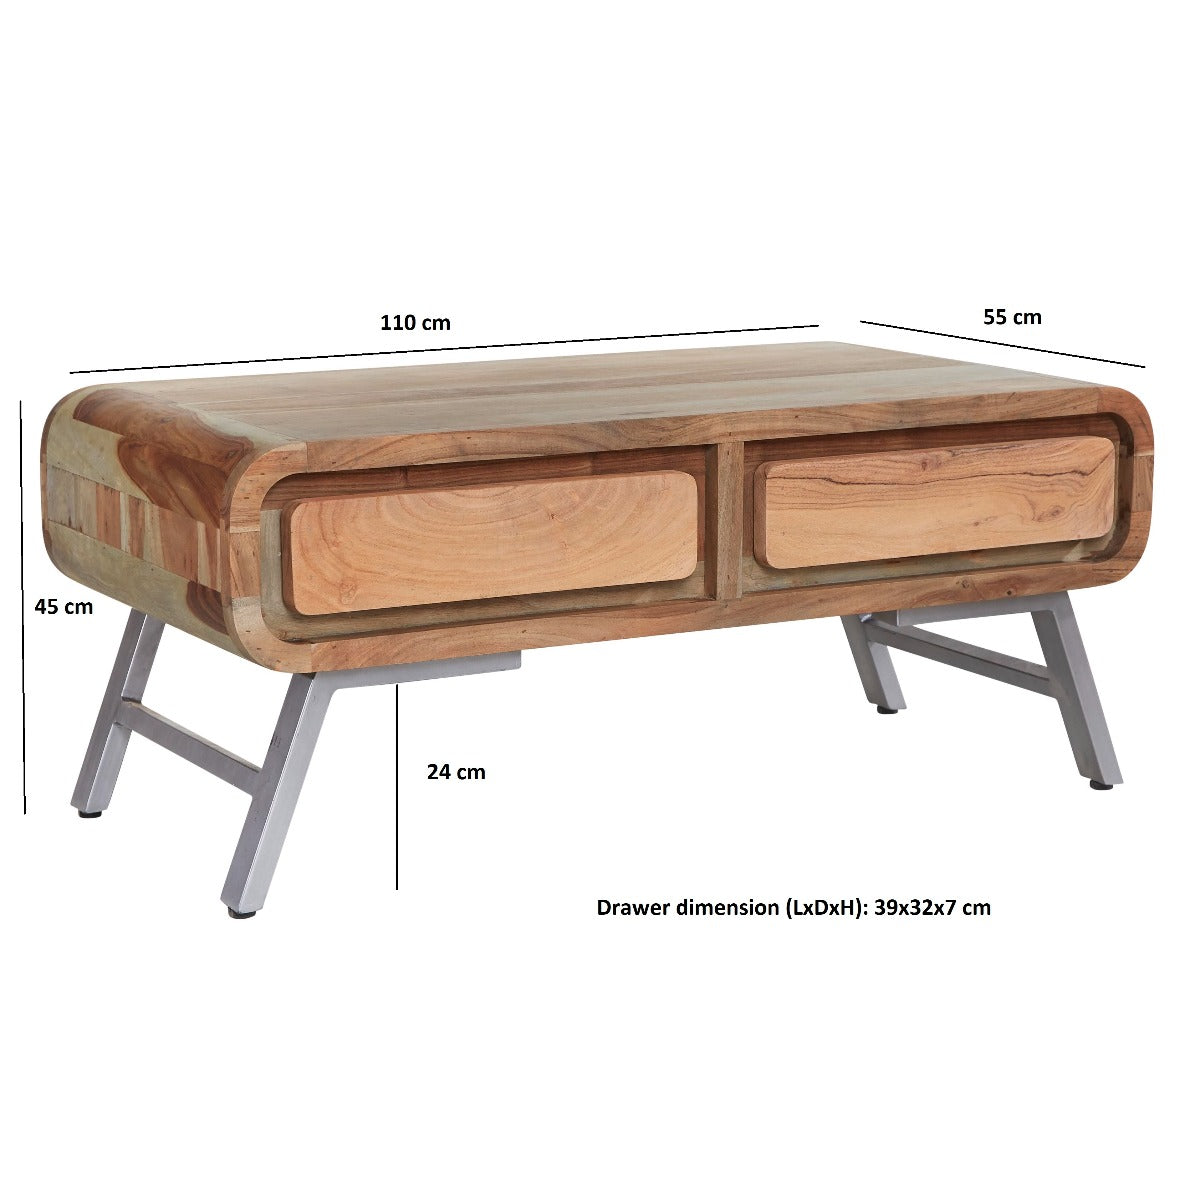 Kasia handmade acacia wood coffee table with reclaimed metal legs| MalletandPlane.com